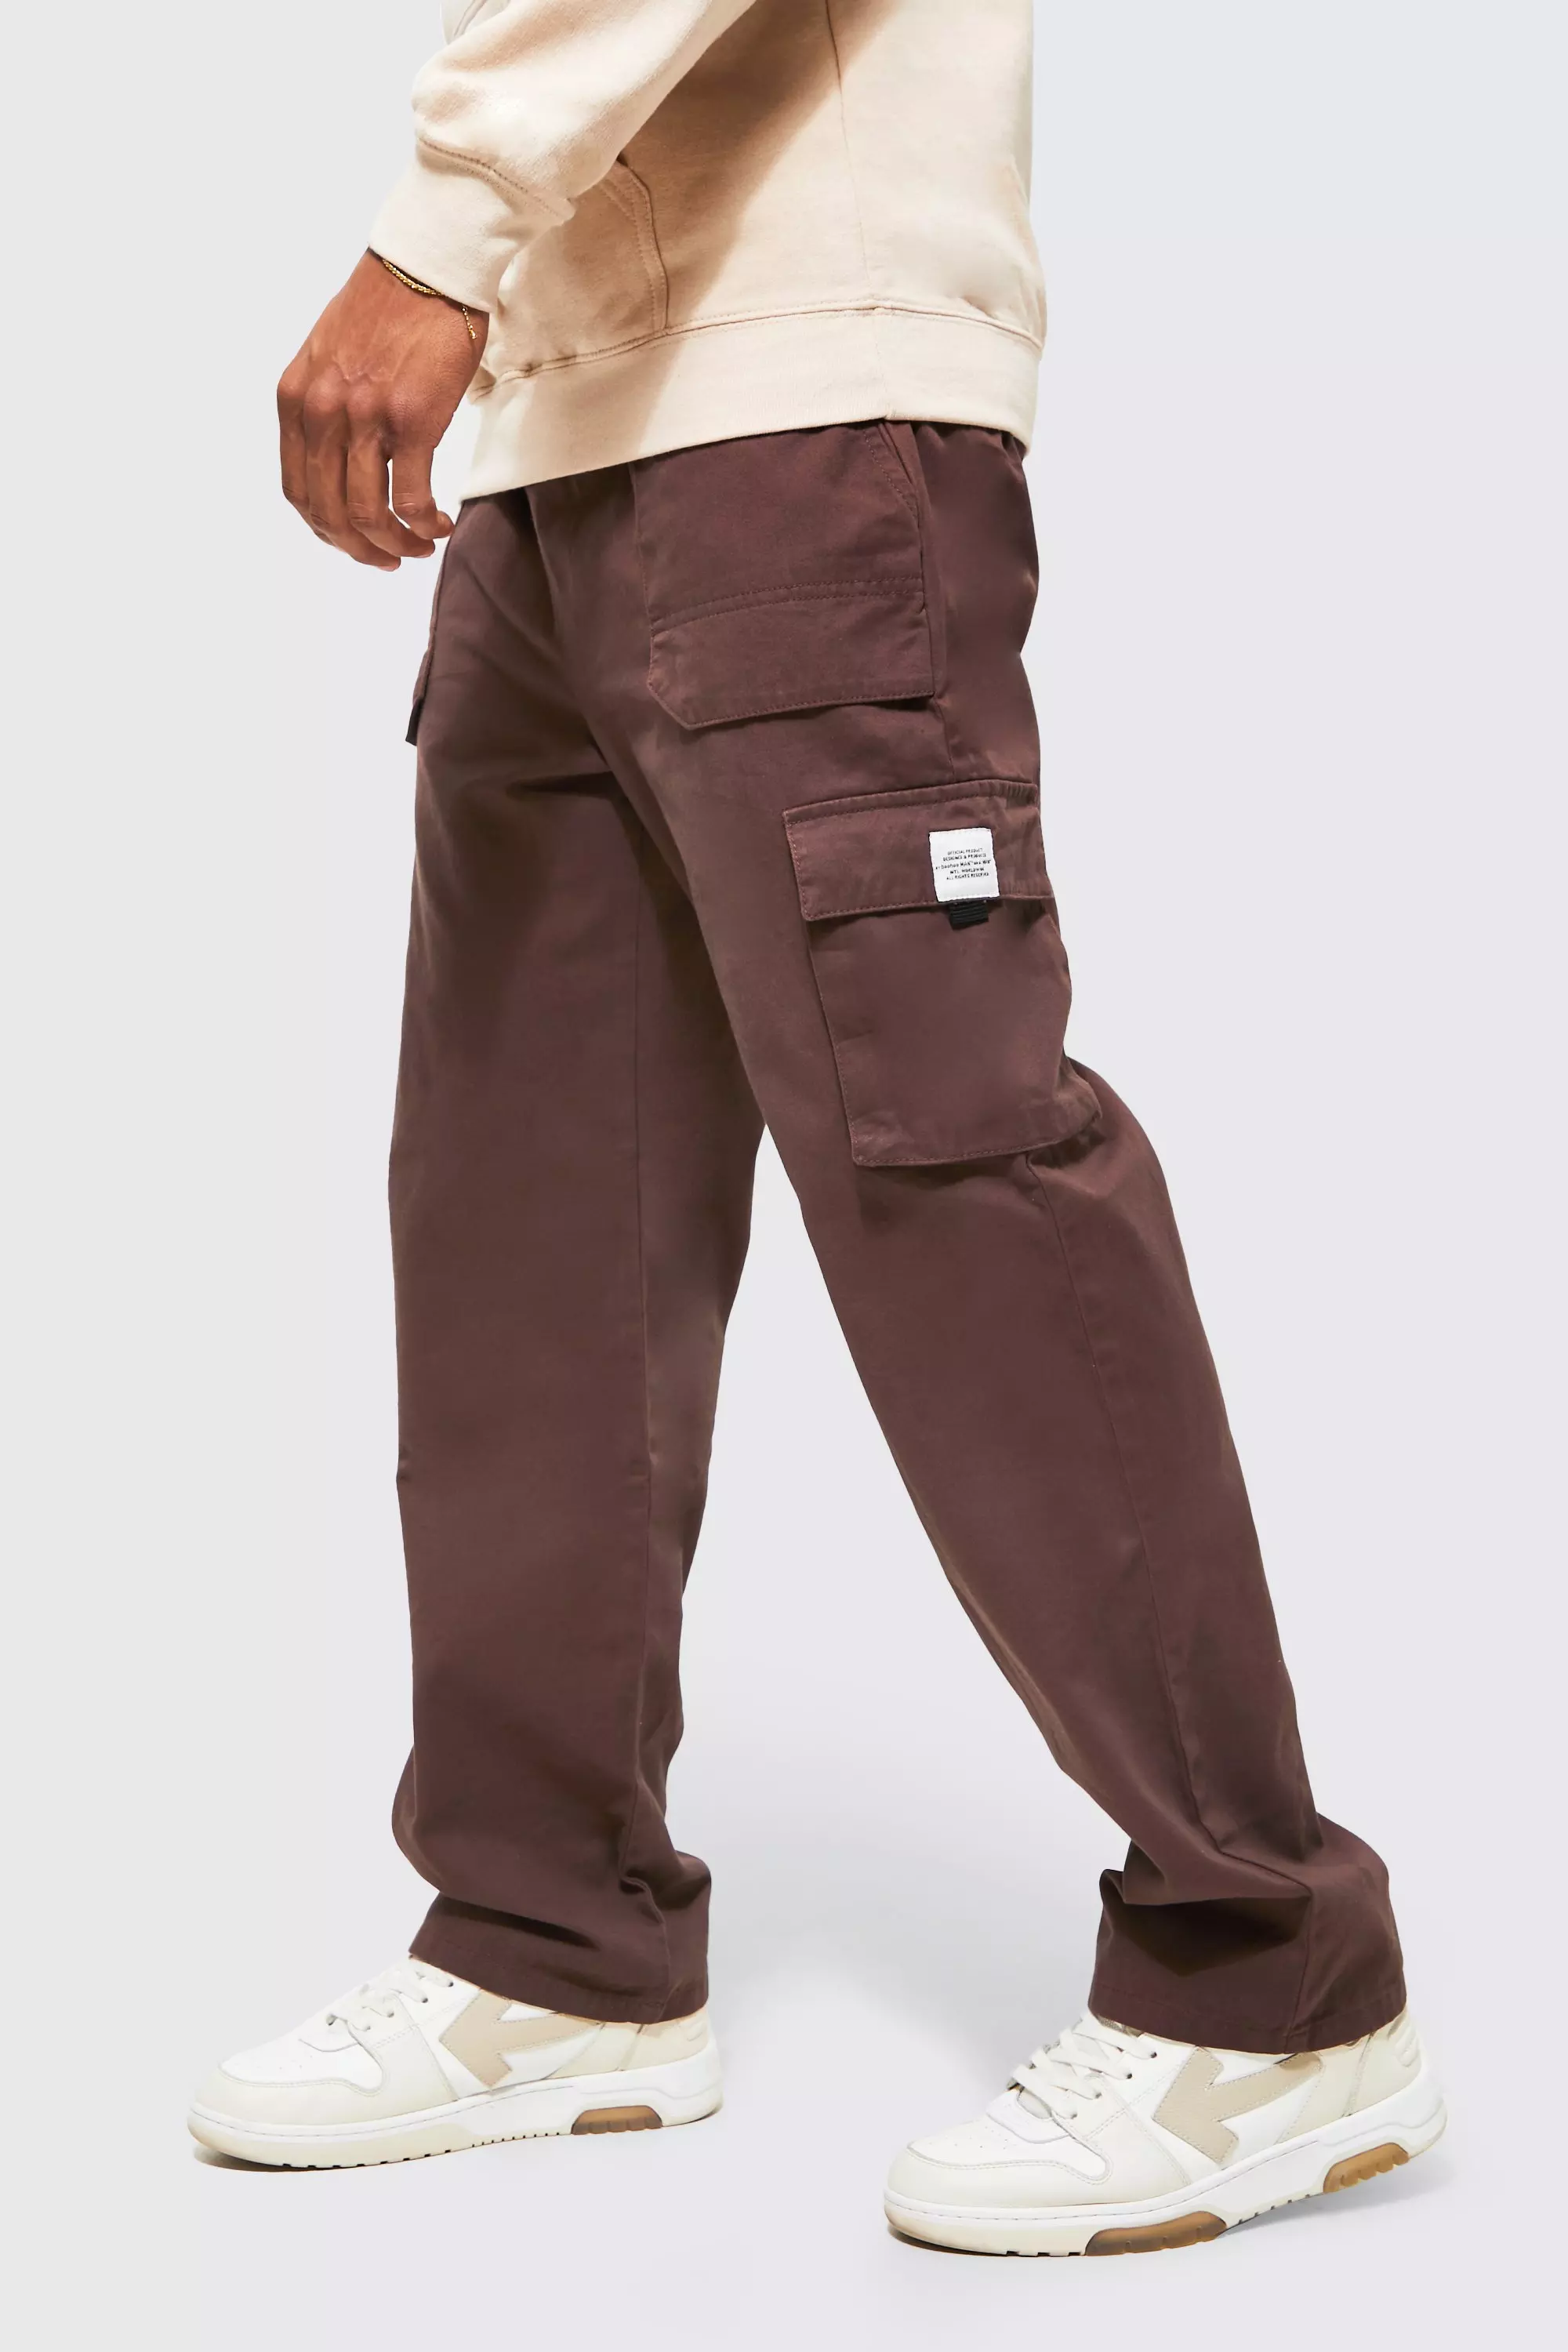 CG JEANS Baggy fit Cargo Jogger Pants with Seat Belt Style Buckle Olive w  Black Belt Juniors Size 18 Plus 